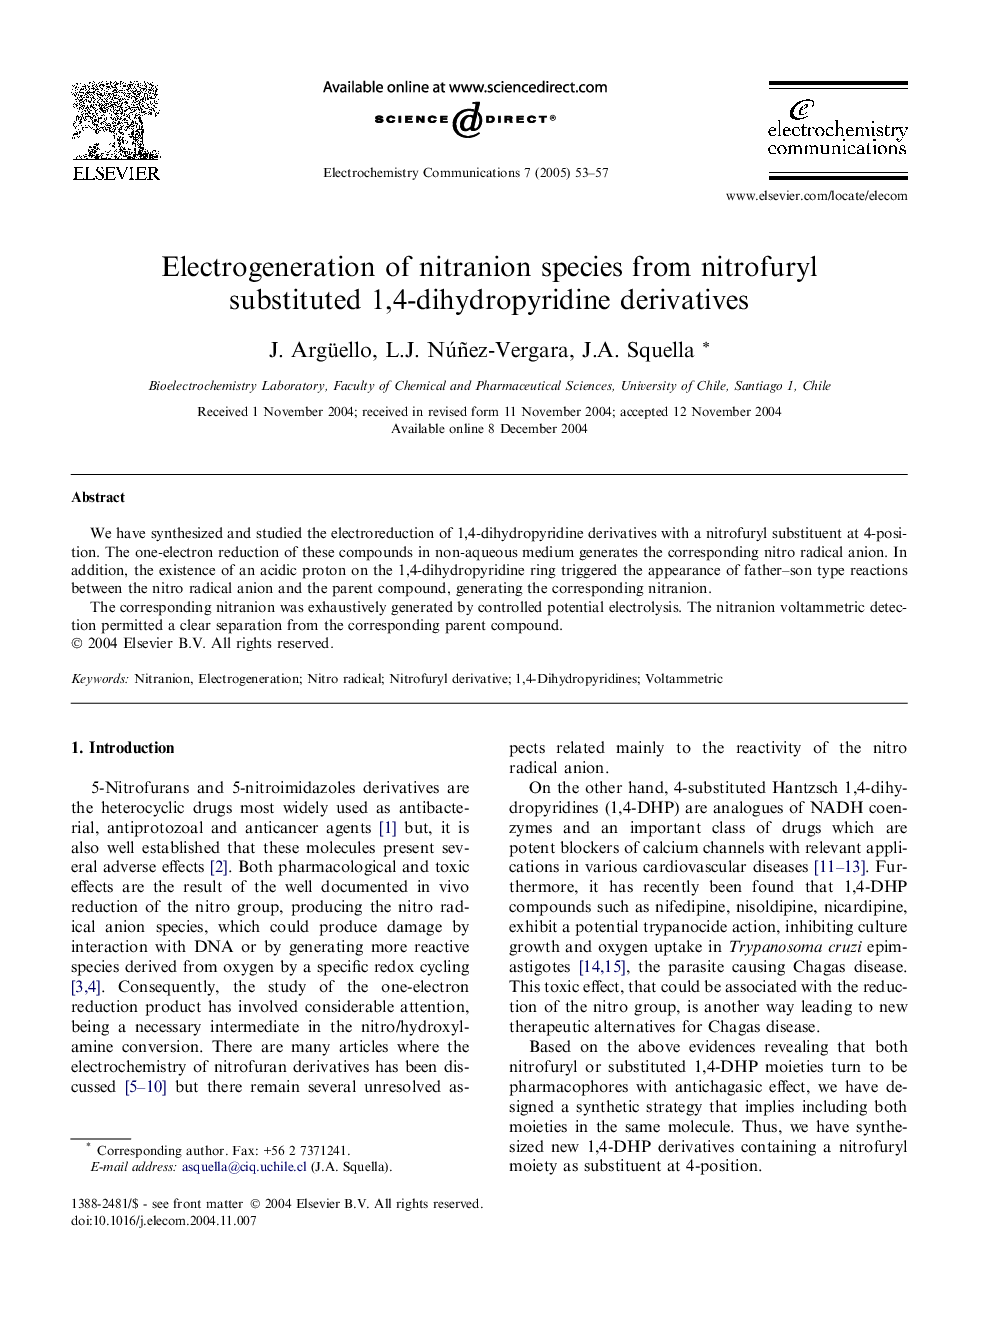 Electrogeneration of nitranion species from nitrofuryl substituted 1,4-dihydropyridine derivatives